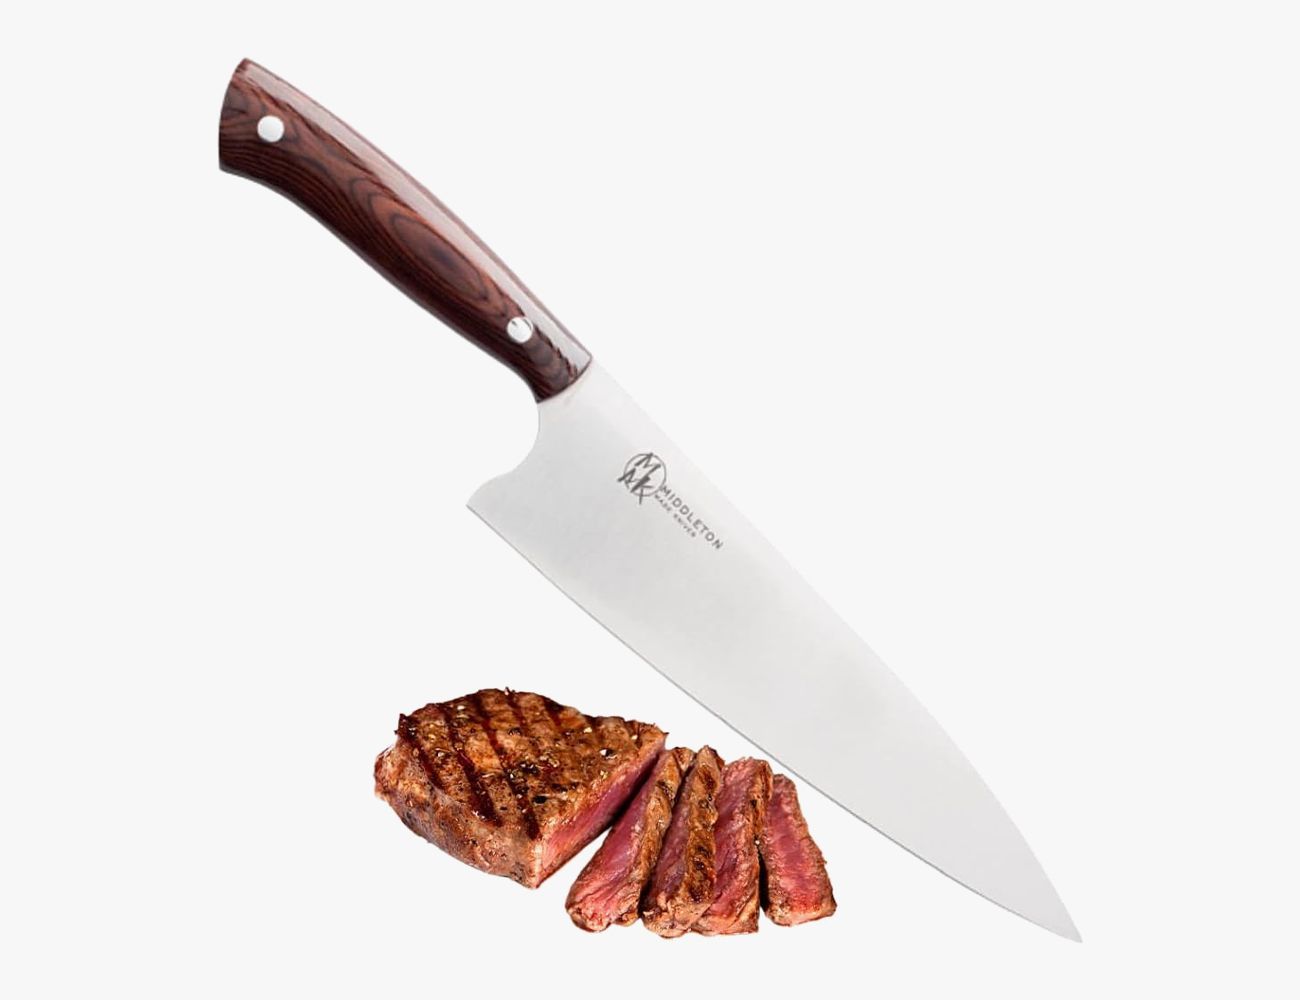 https://hips.hearstapps.com/vader-prod.s3.amazonaws.com/1697129261-middleton-made-knives-echo-8-inch-chef-knife-652823231aa74.jpg